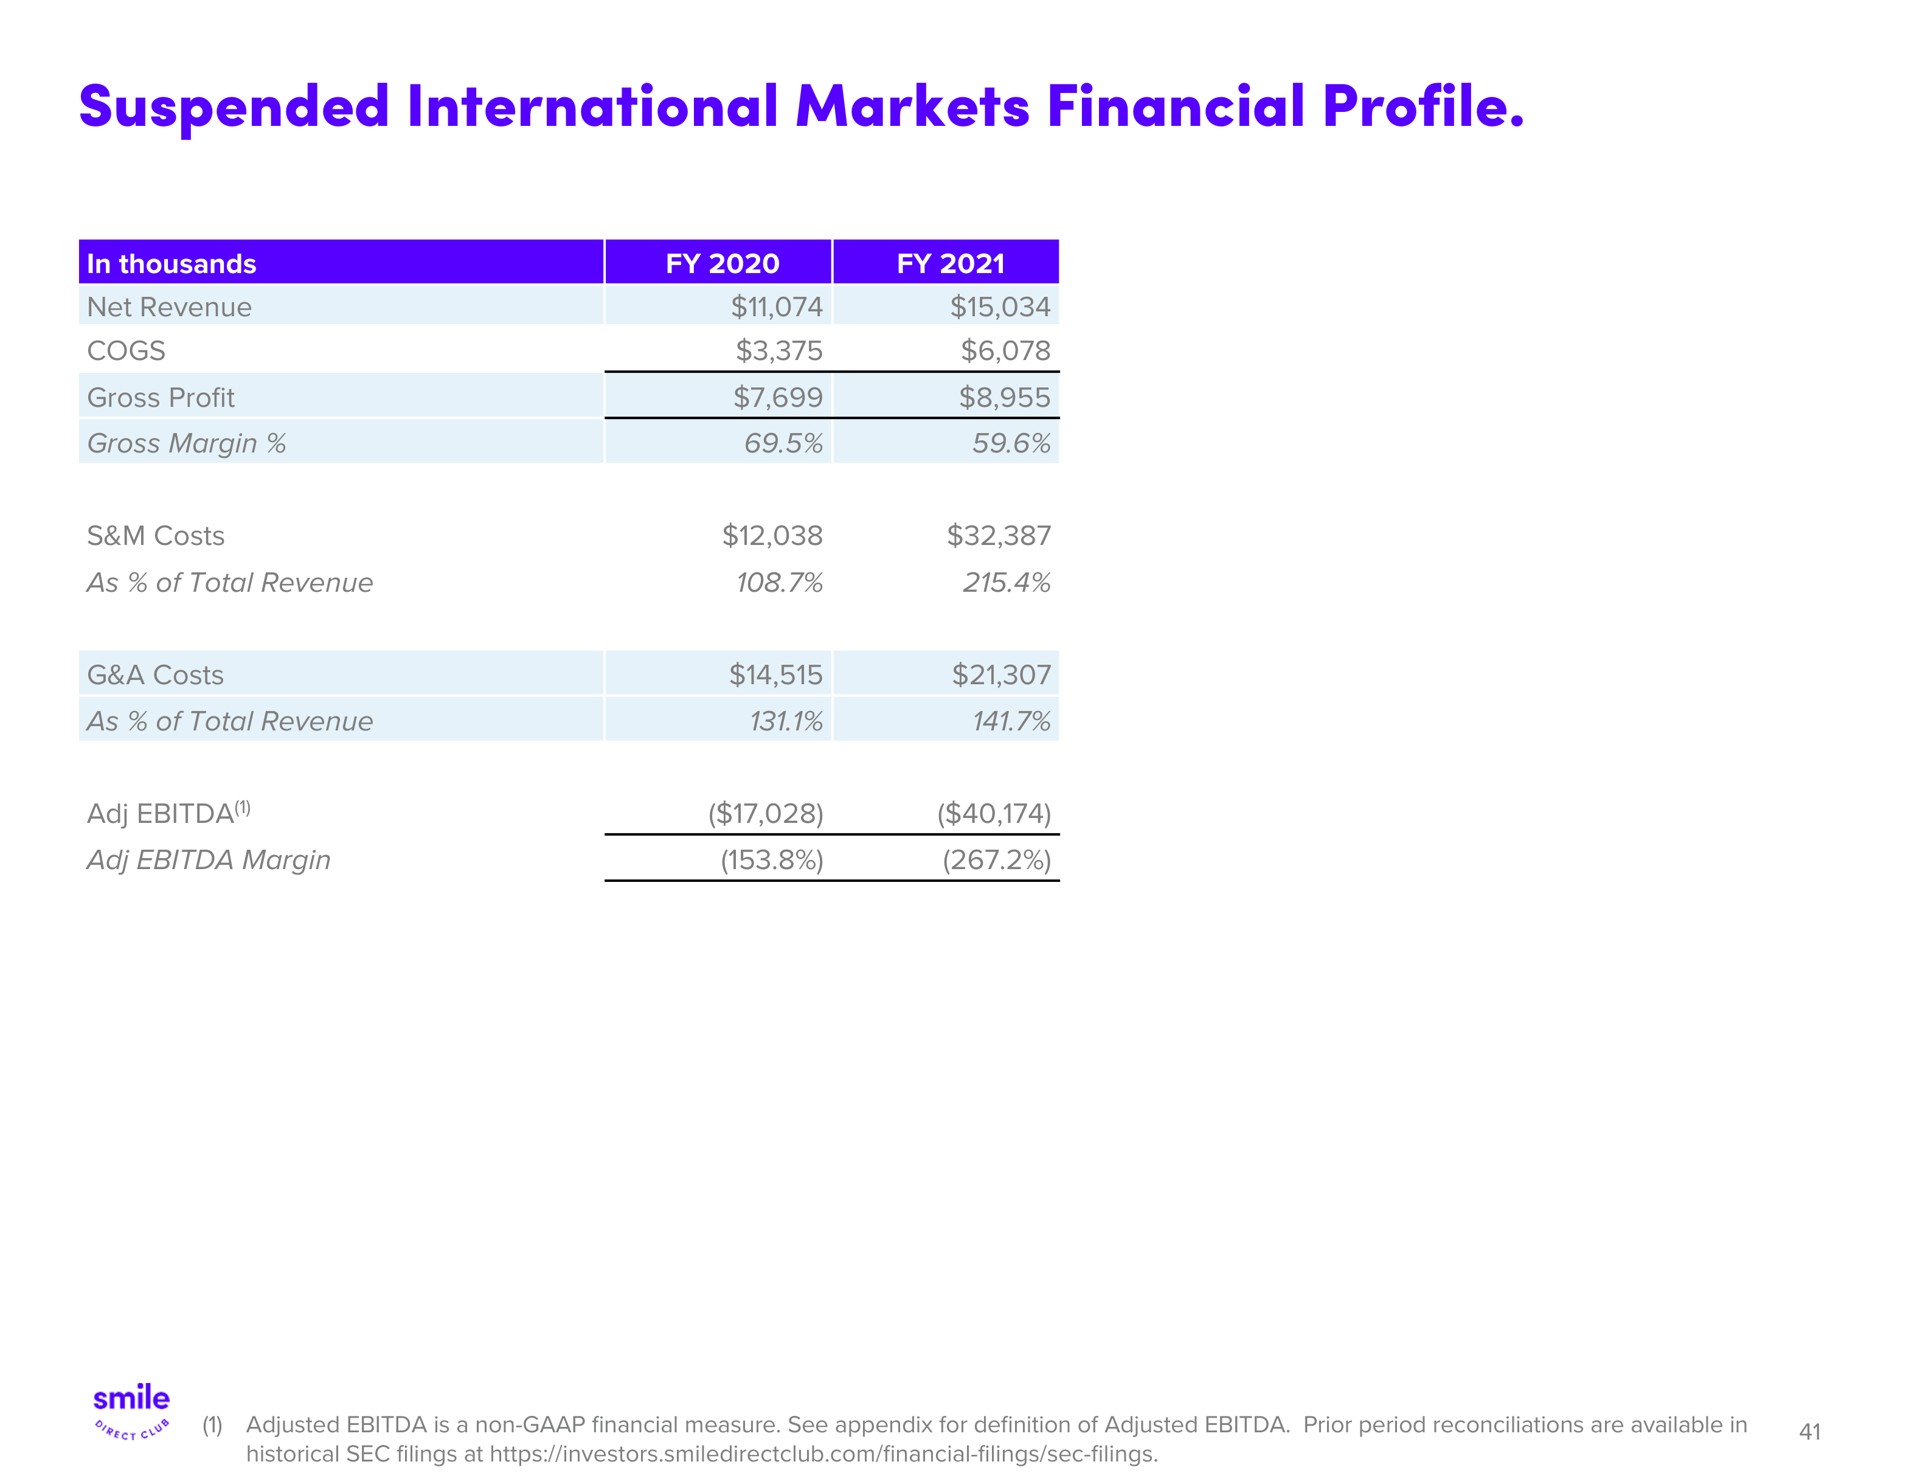 suspended international markets financial profile | SmileDirectClub